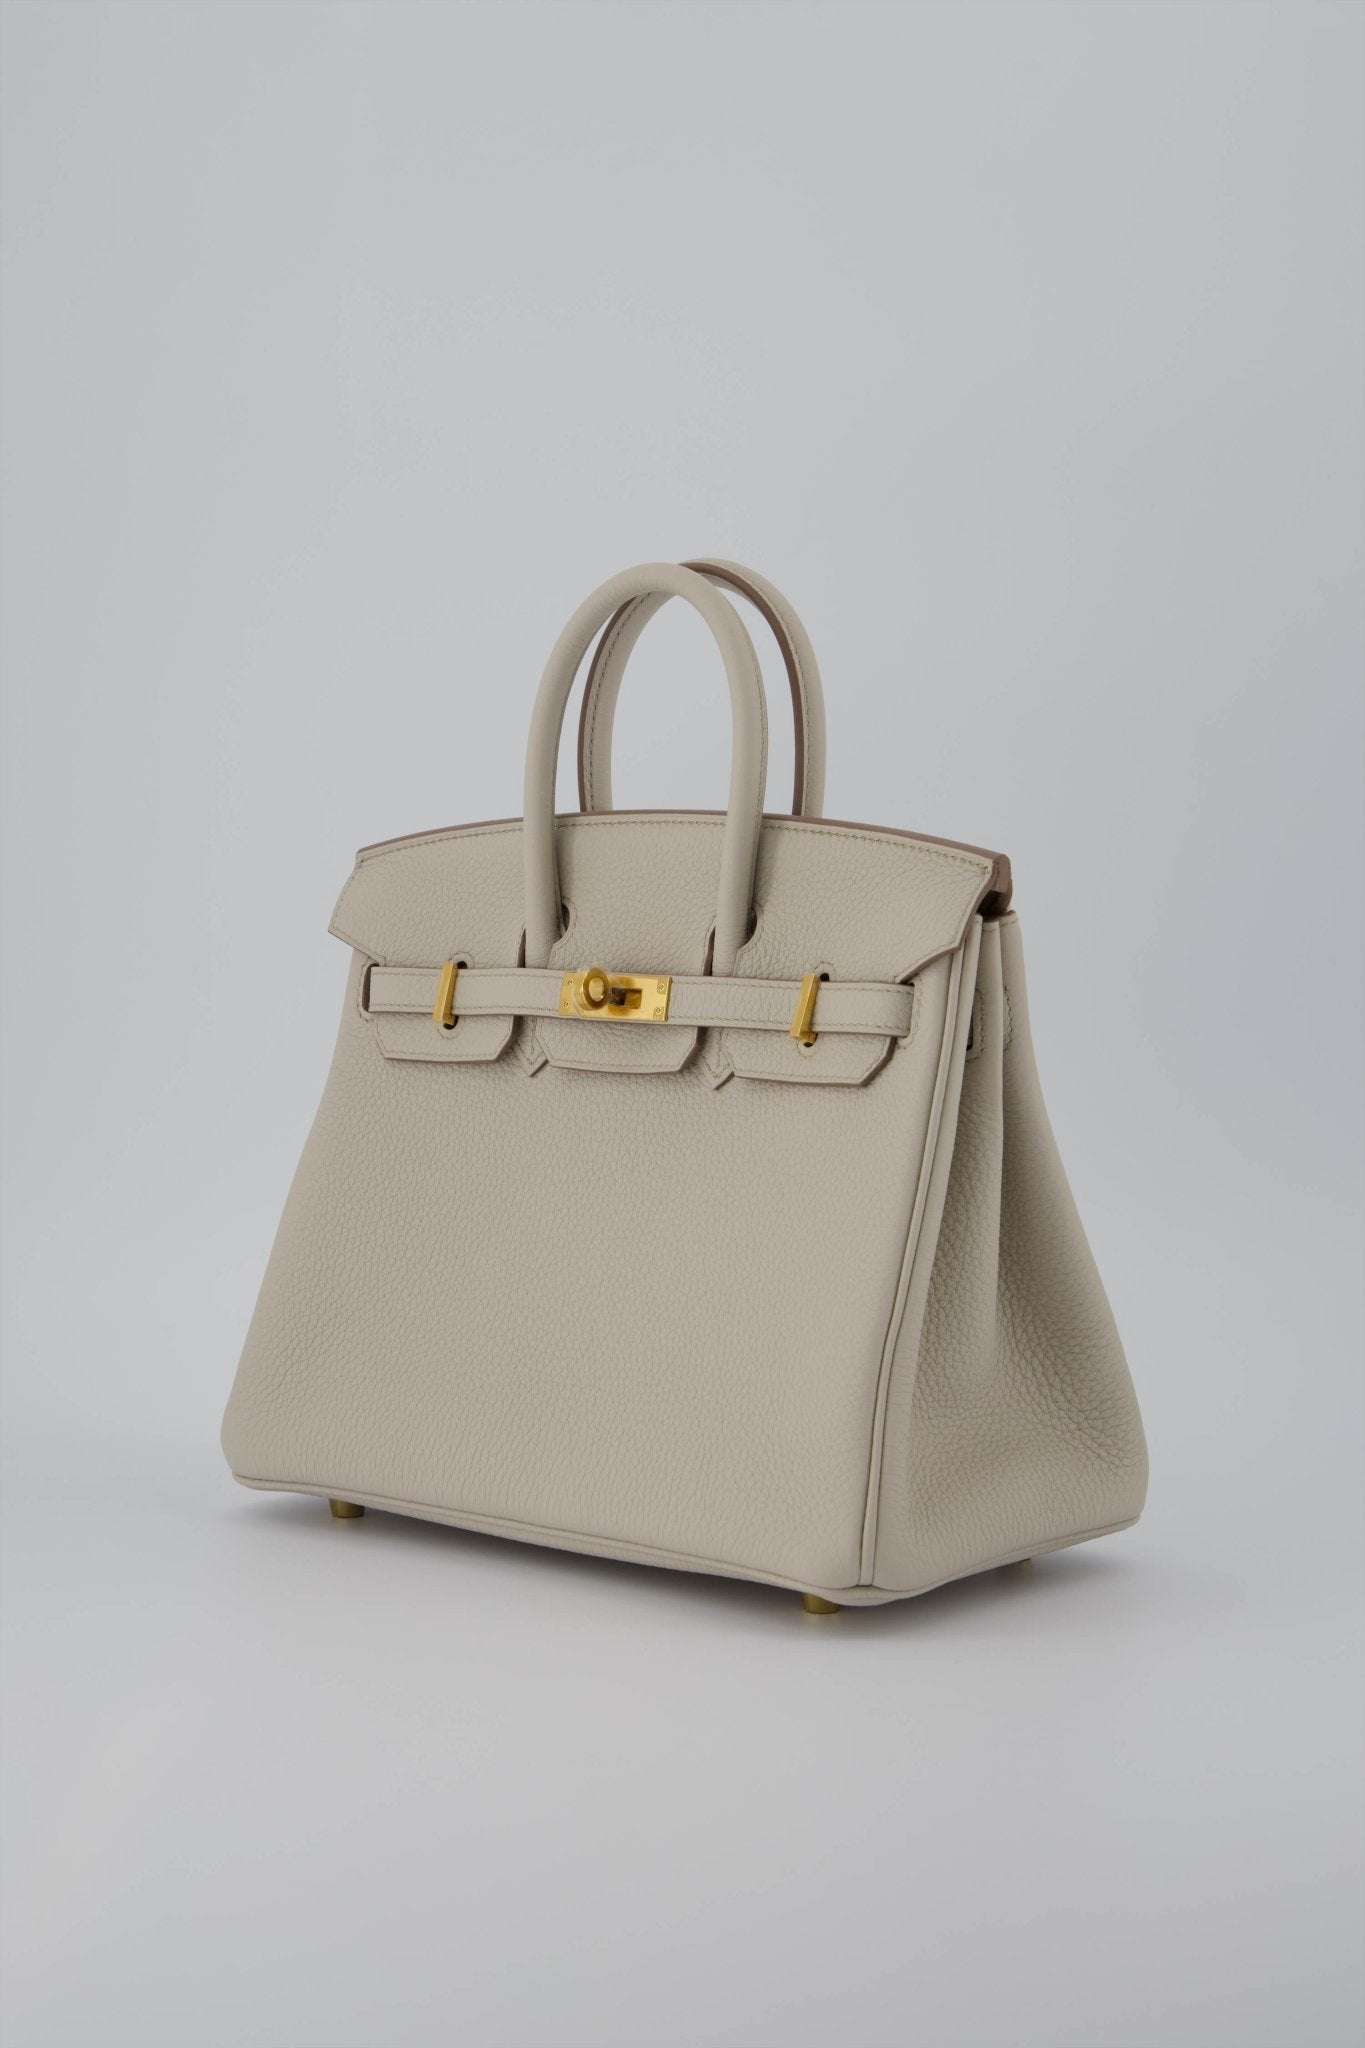 Hermes Birkin Mini Bag Togo Leather Gold Hardware In White